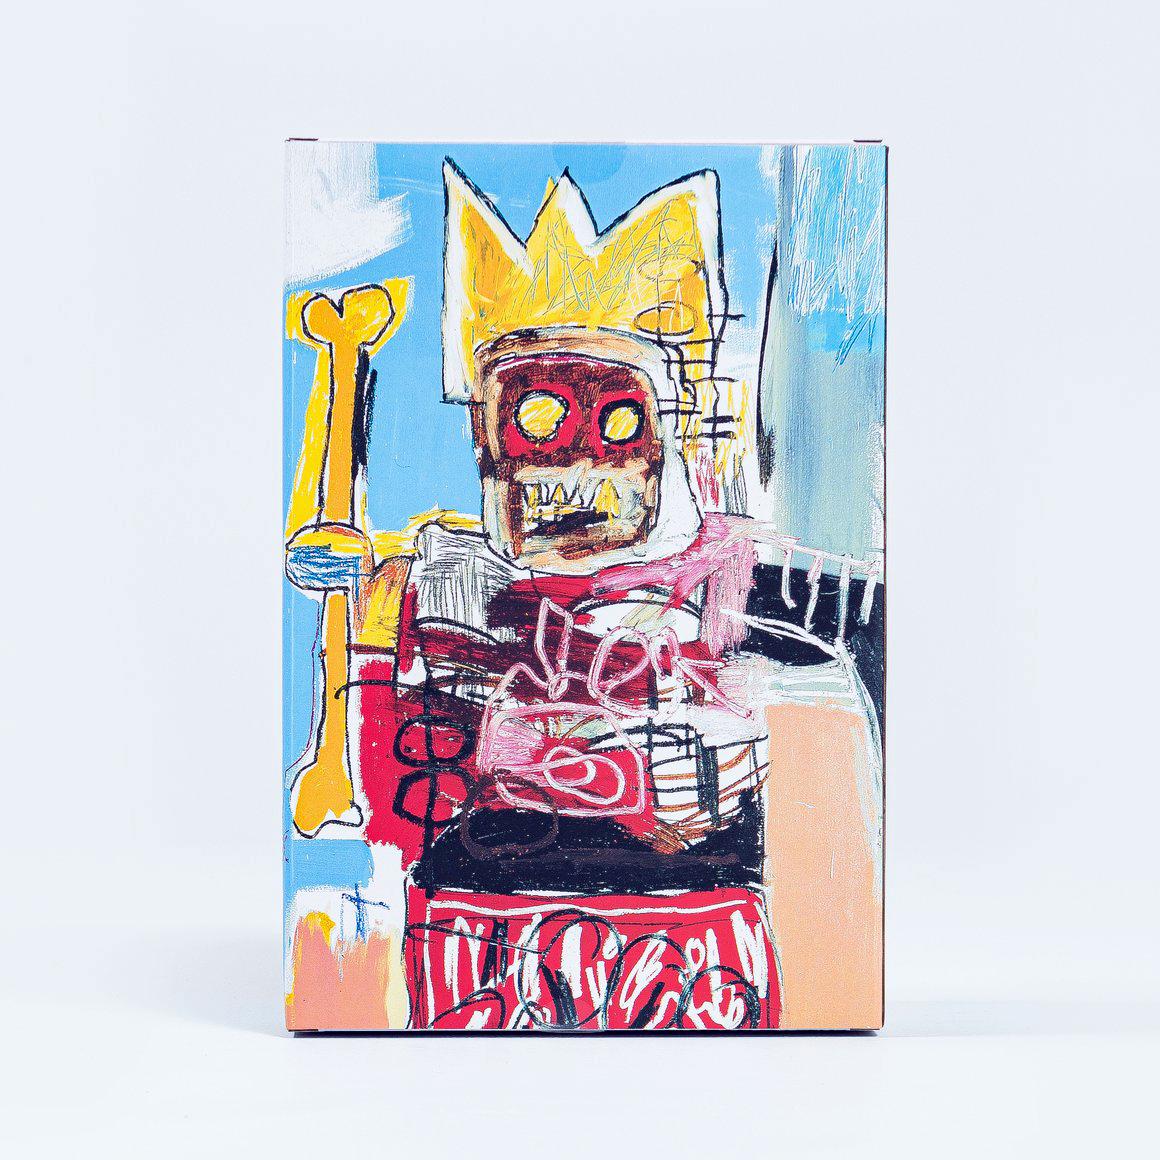 BEARBRICK JEAN-MICHEL BASQUIAT 400% &100% Medicom Toy Japan Vinyl figure POP ART - Modern Sculpture by after Jean-Michel Basquiat